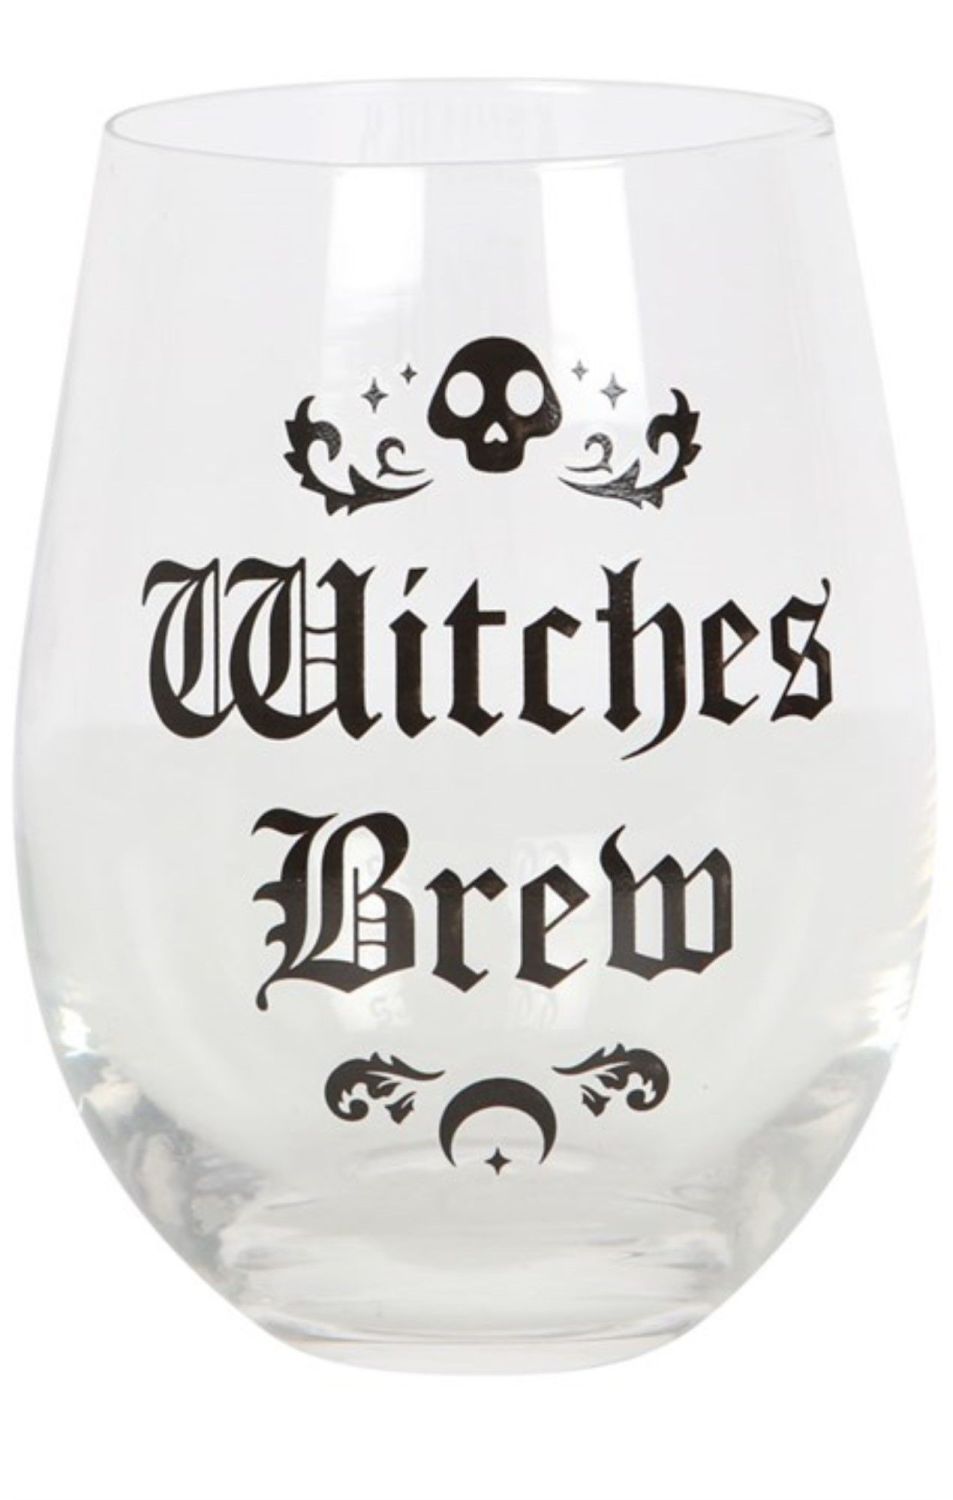 Witches brew stemless wine glass